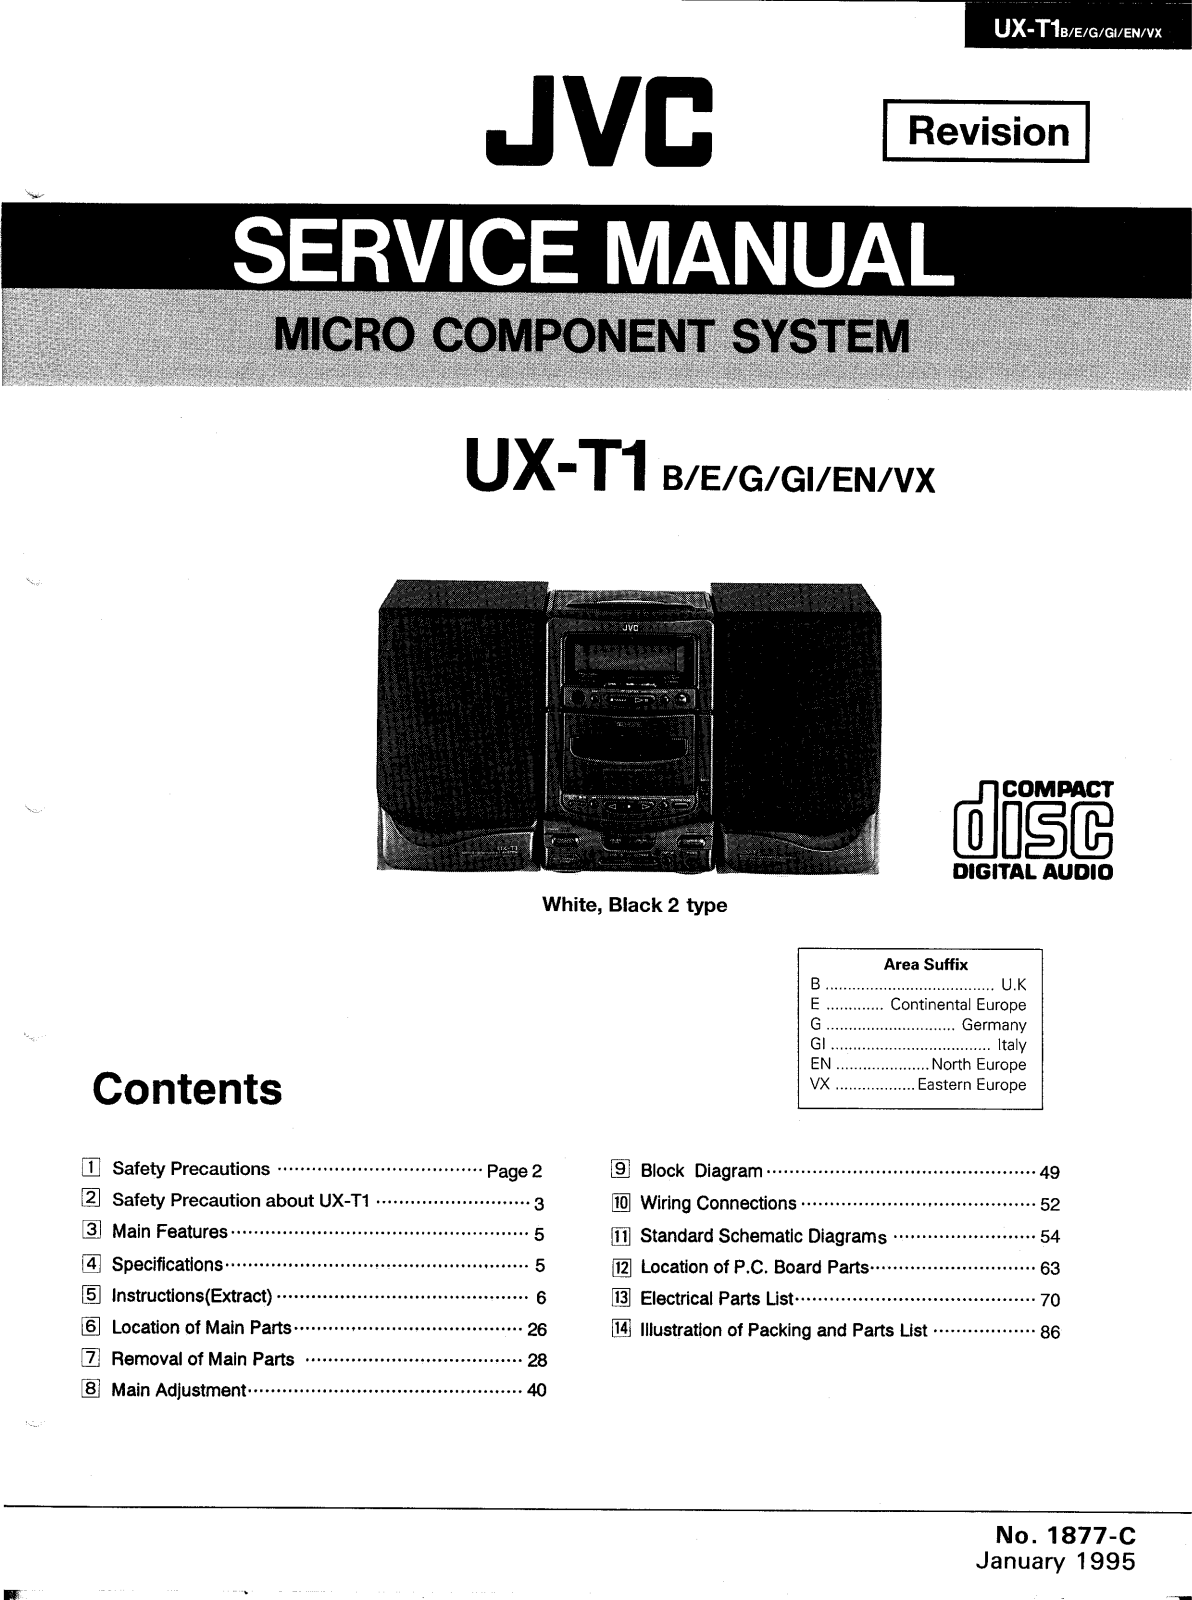 JVC UXT-1 Service manual